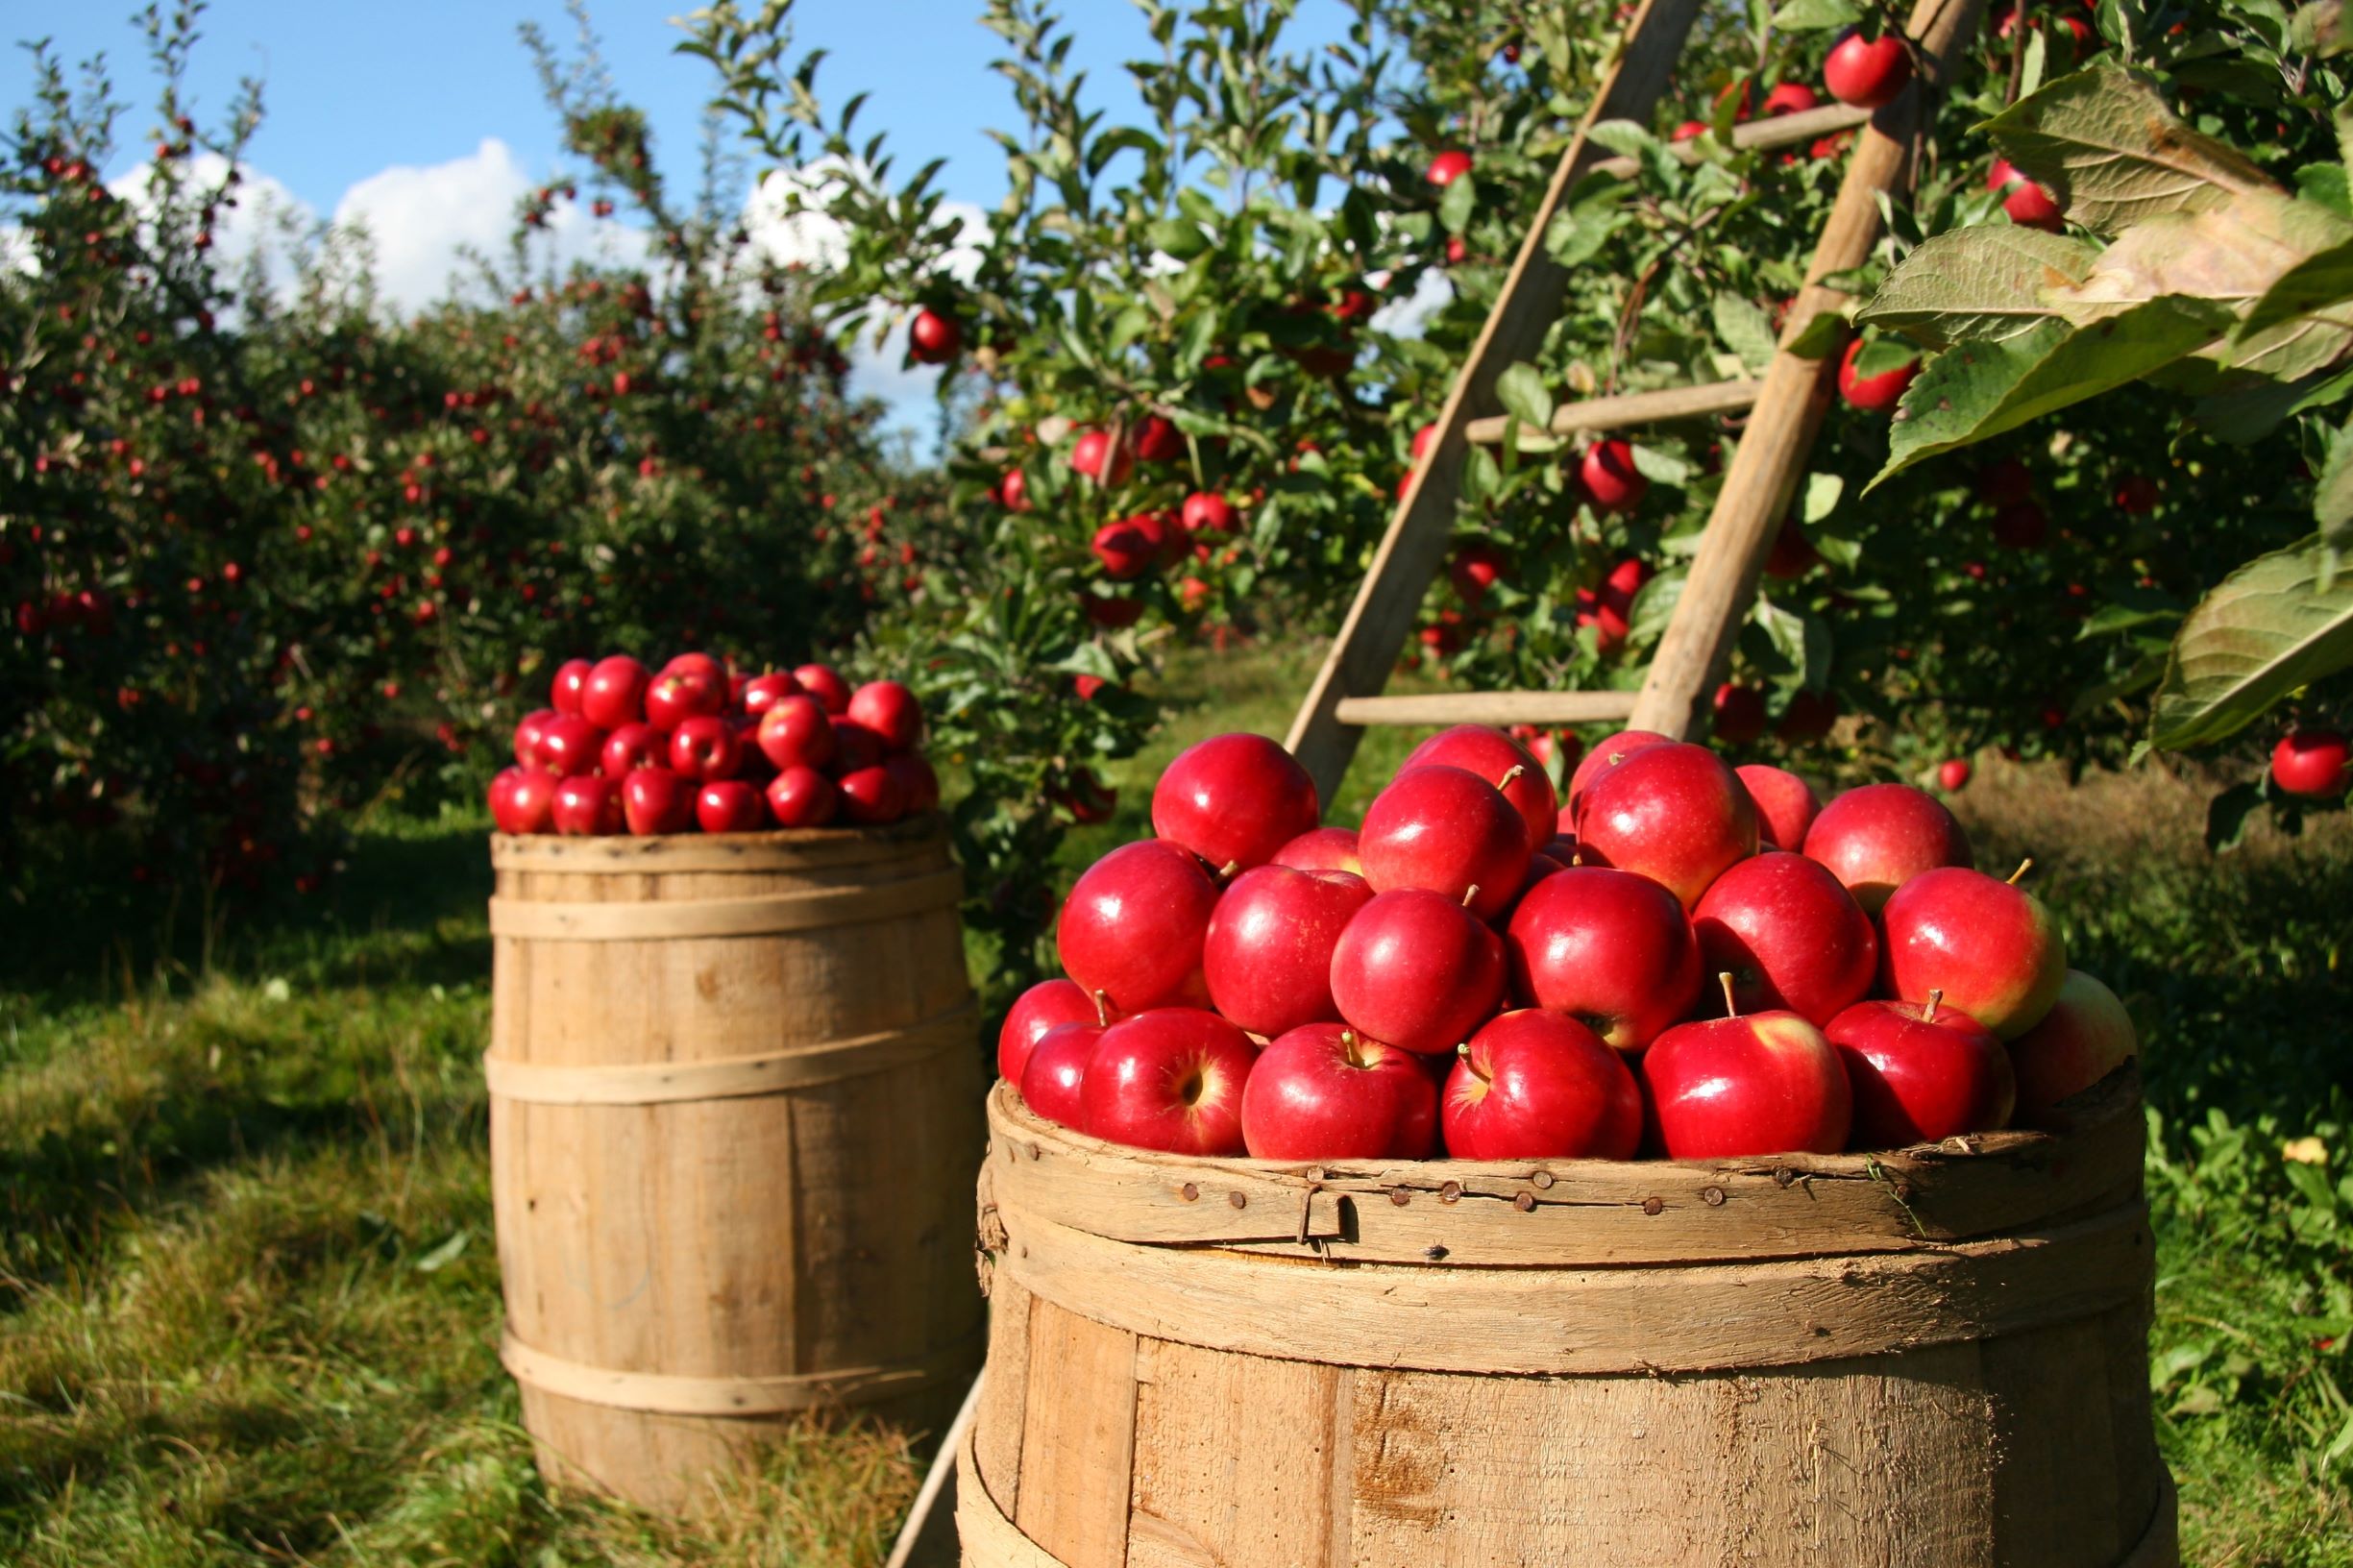 barrels of apples under apple trees